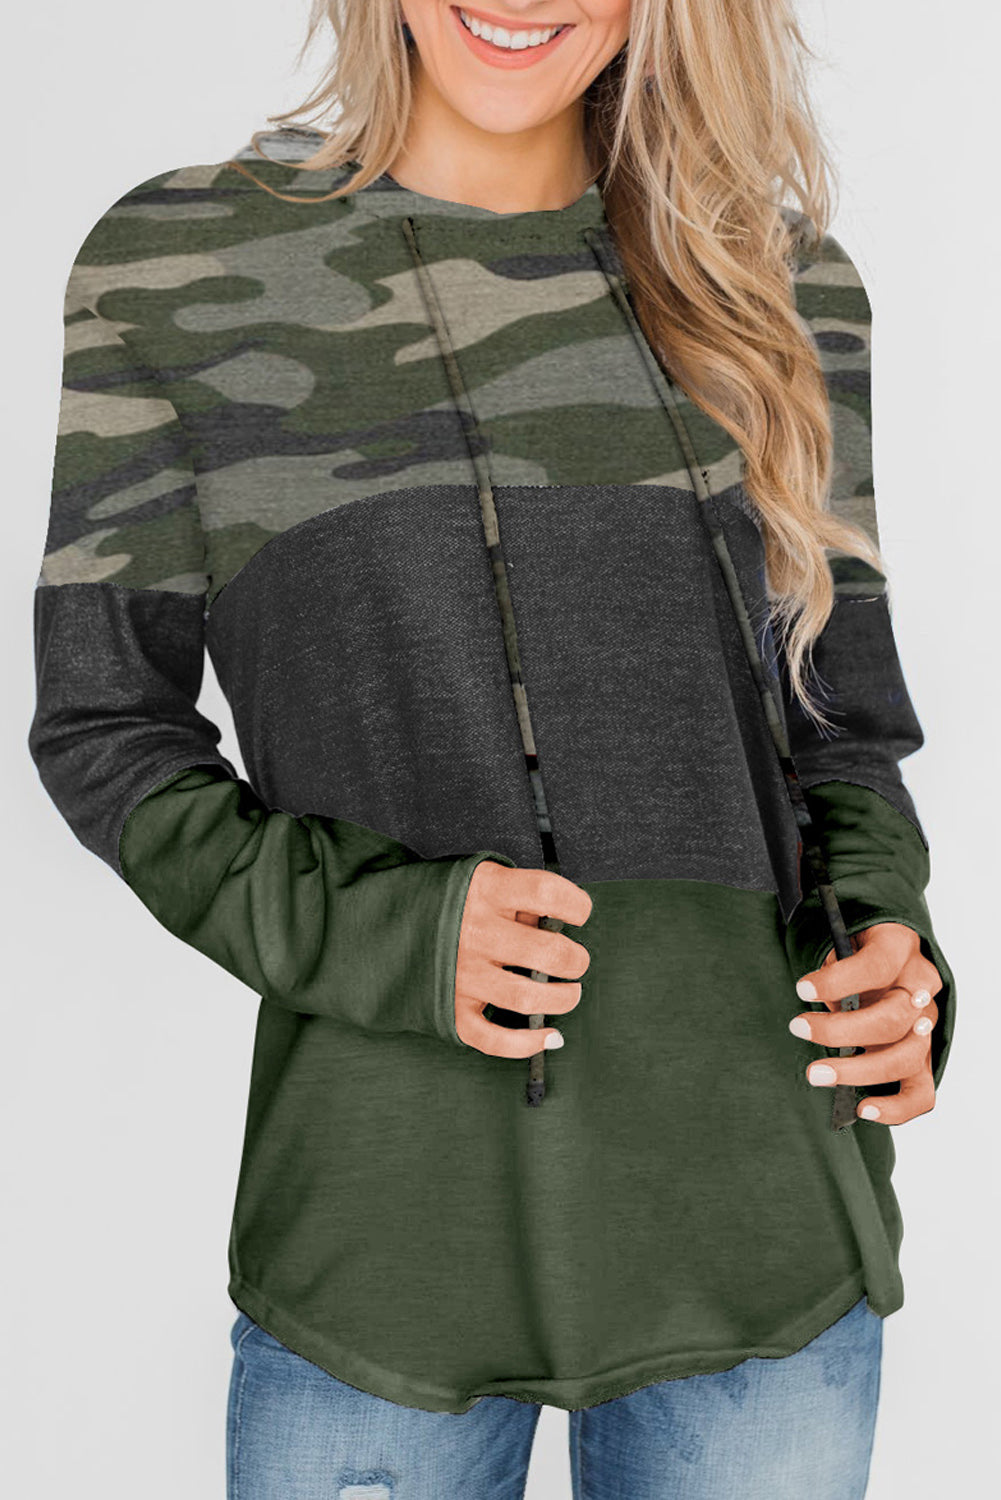 Cali Chic Women Sweatshirt Hoodie Celebrity Camo Color Block Drawstring